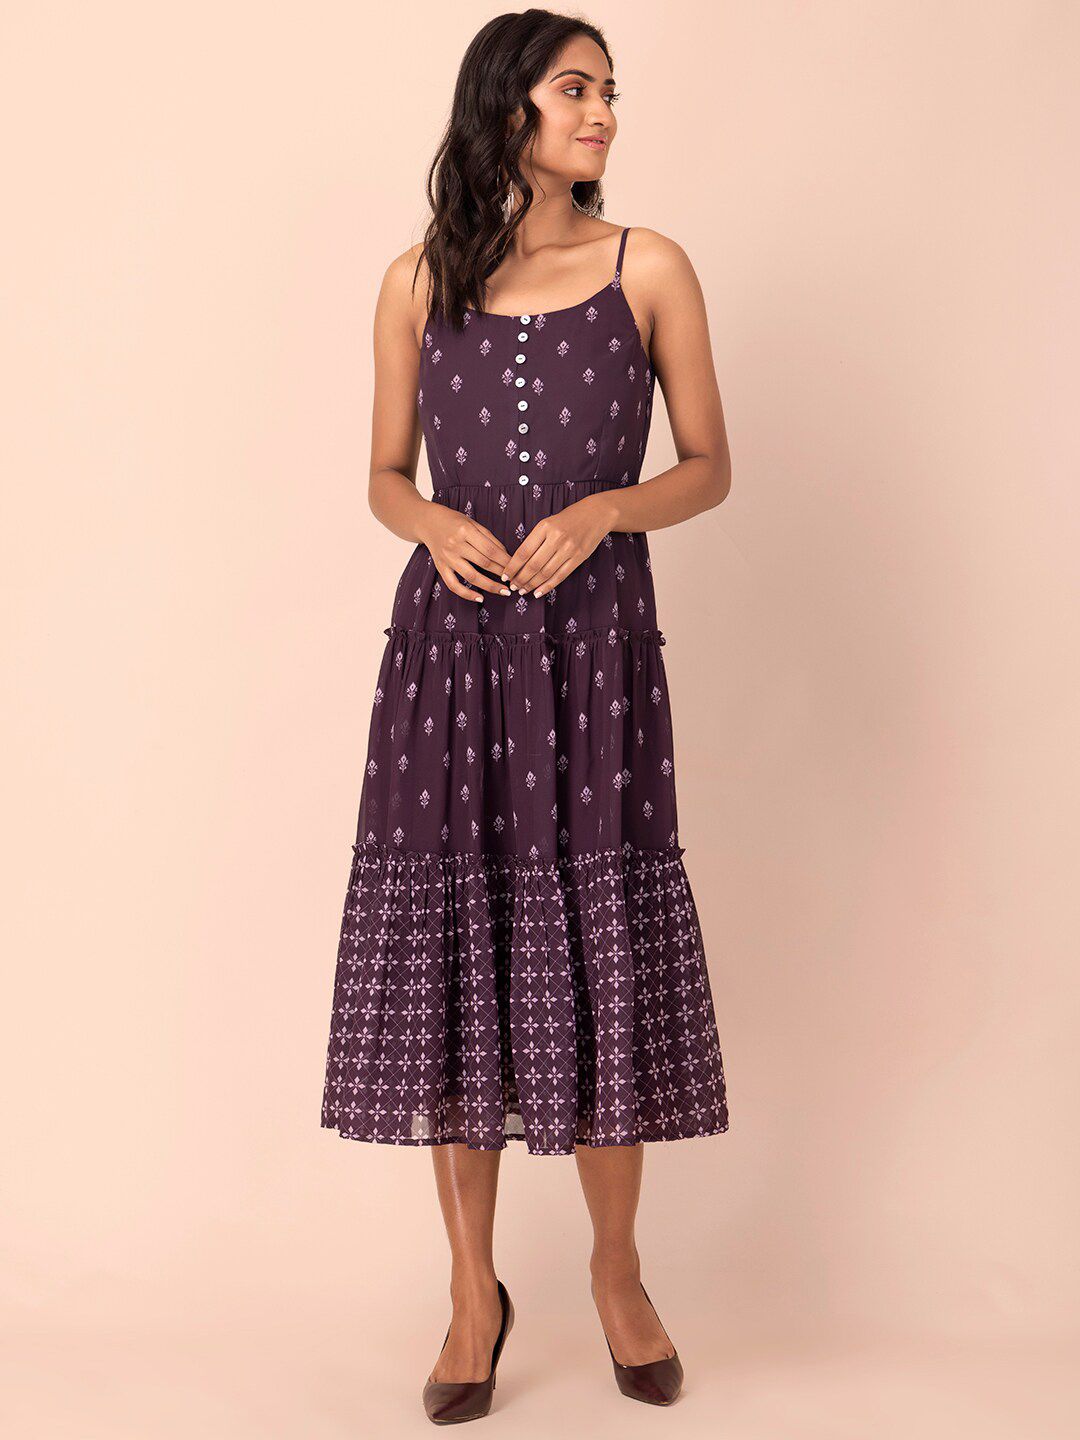 INDYA Purple Floral Georgette A-Line Midi Dress Price in India